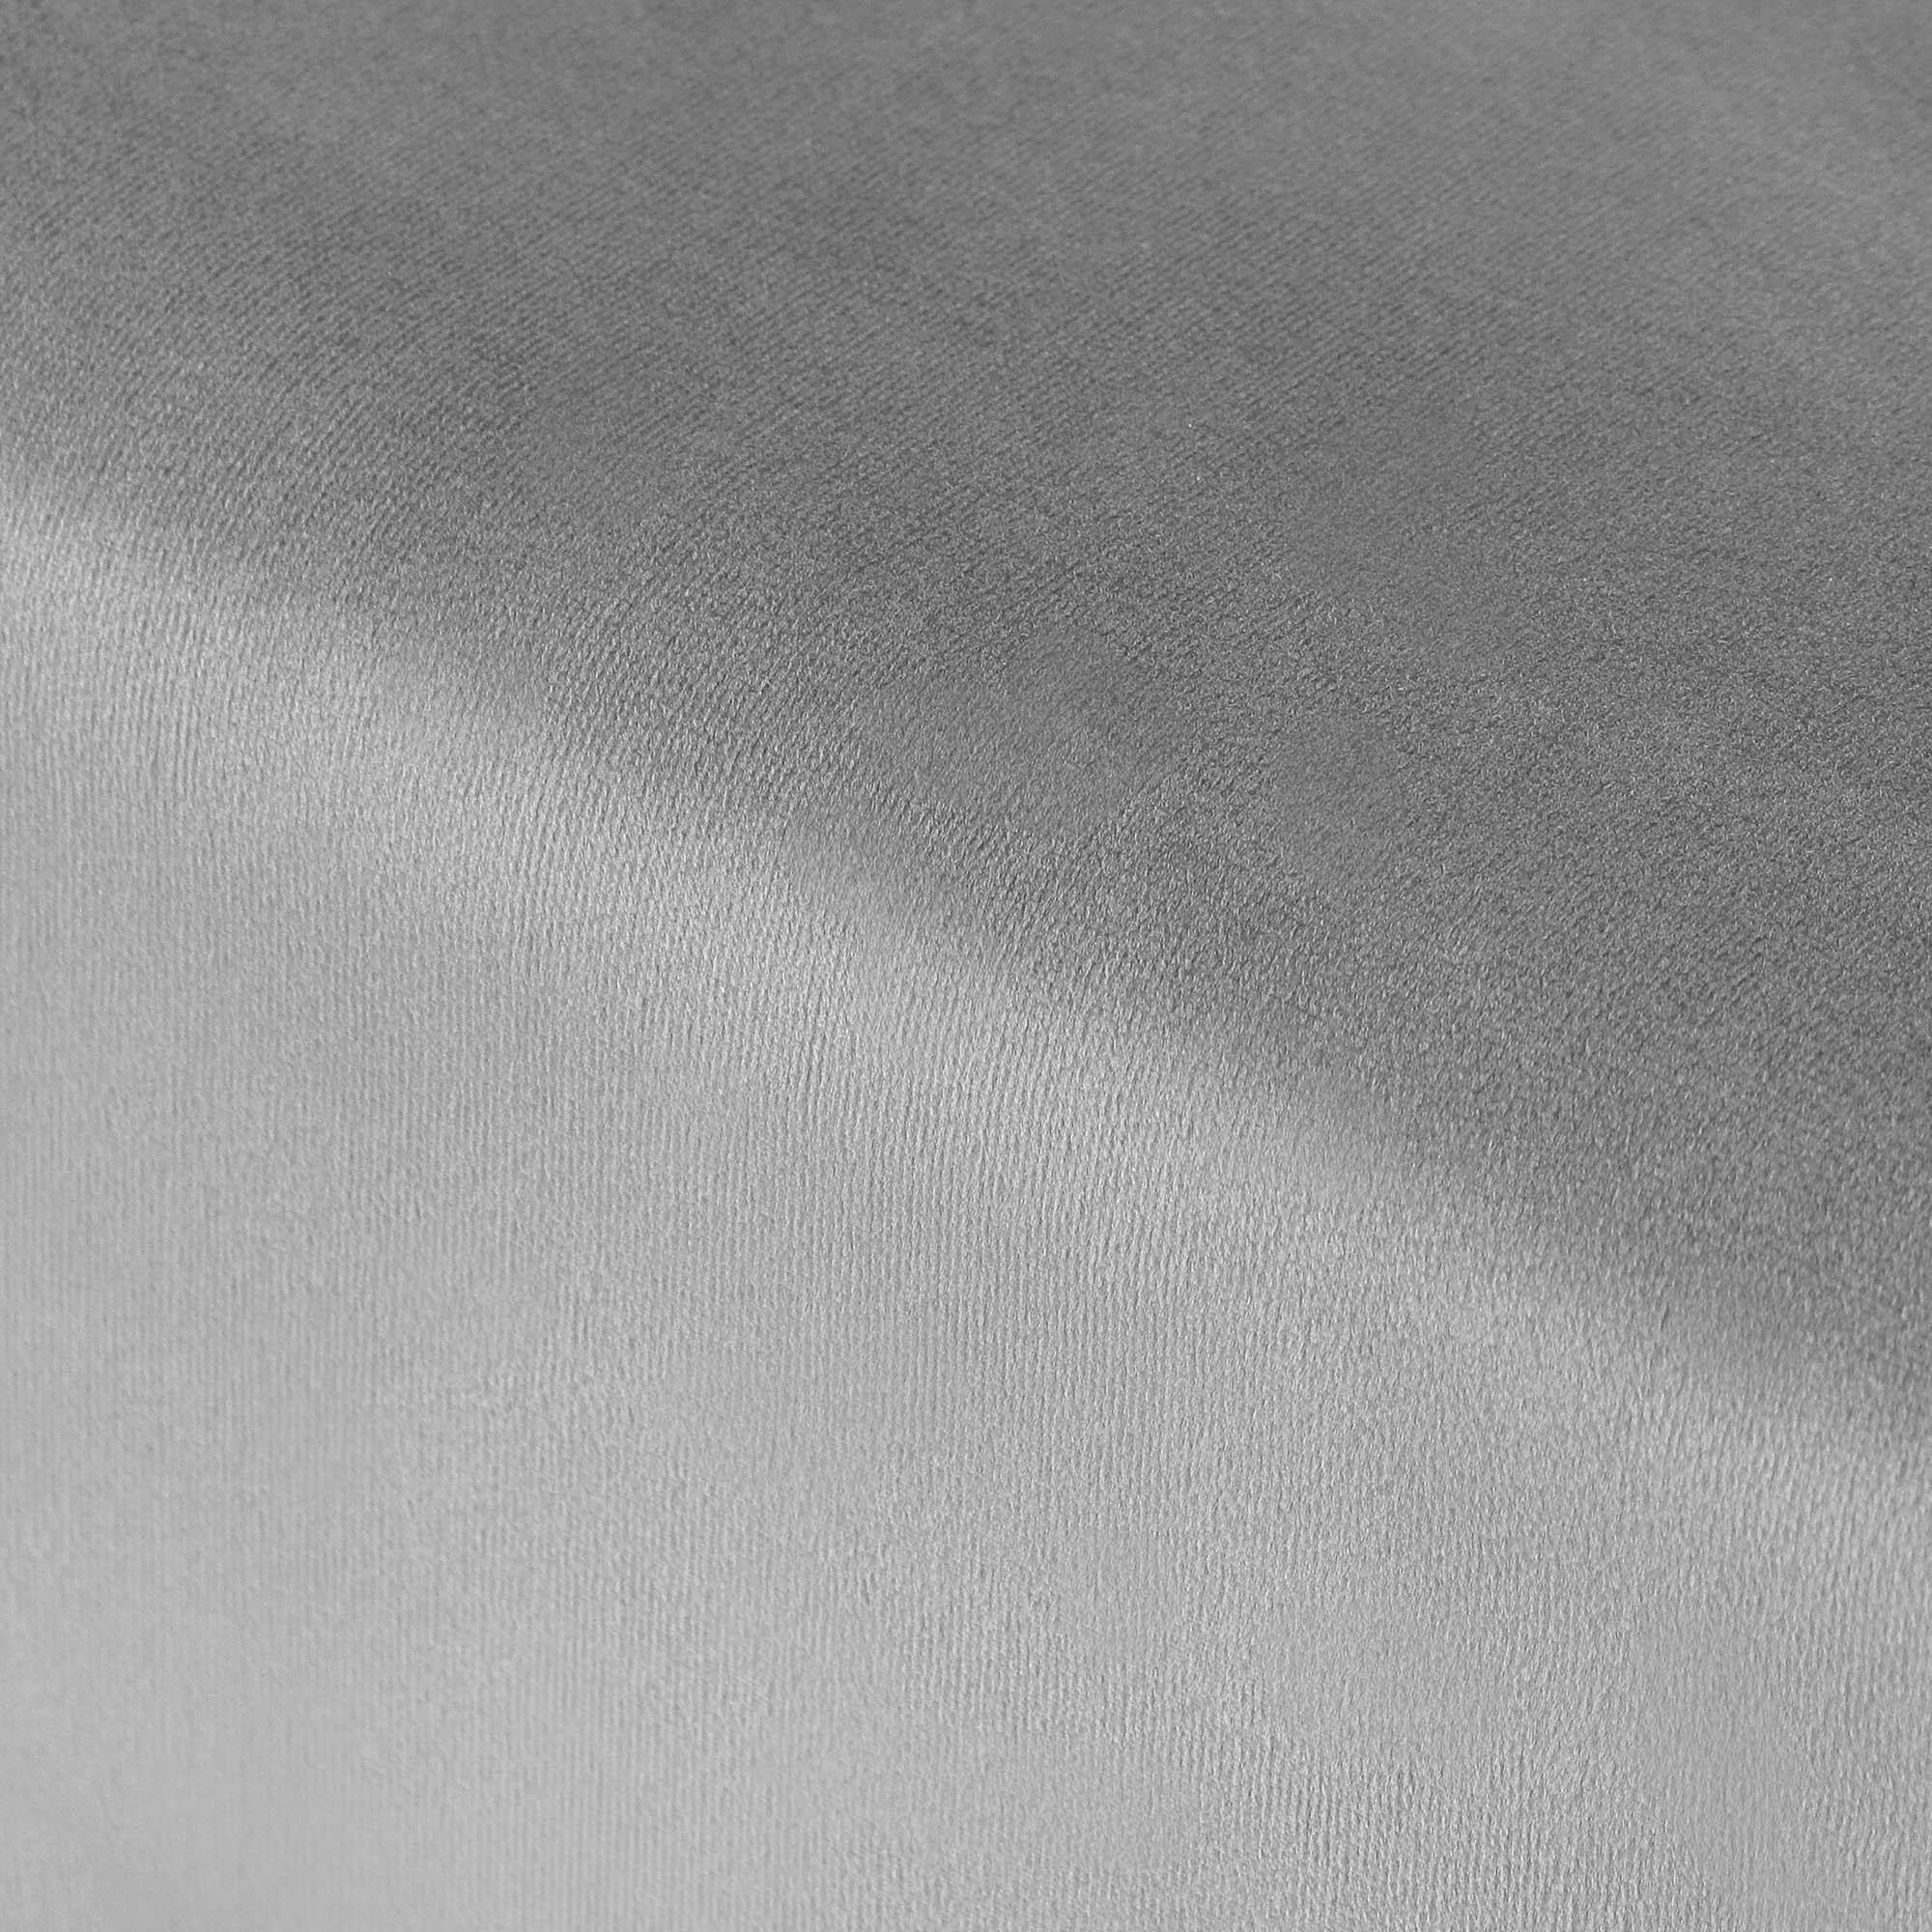 Банкетка Foreign trade серо-бежевая 100x34,5x44 см, цвет серо-бежевый - фото 4